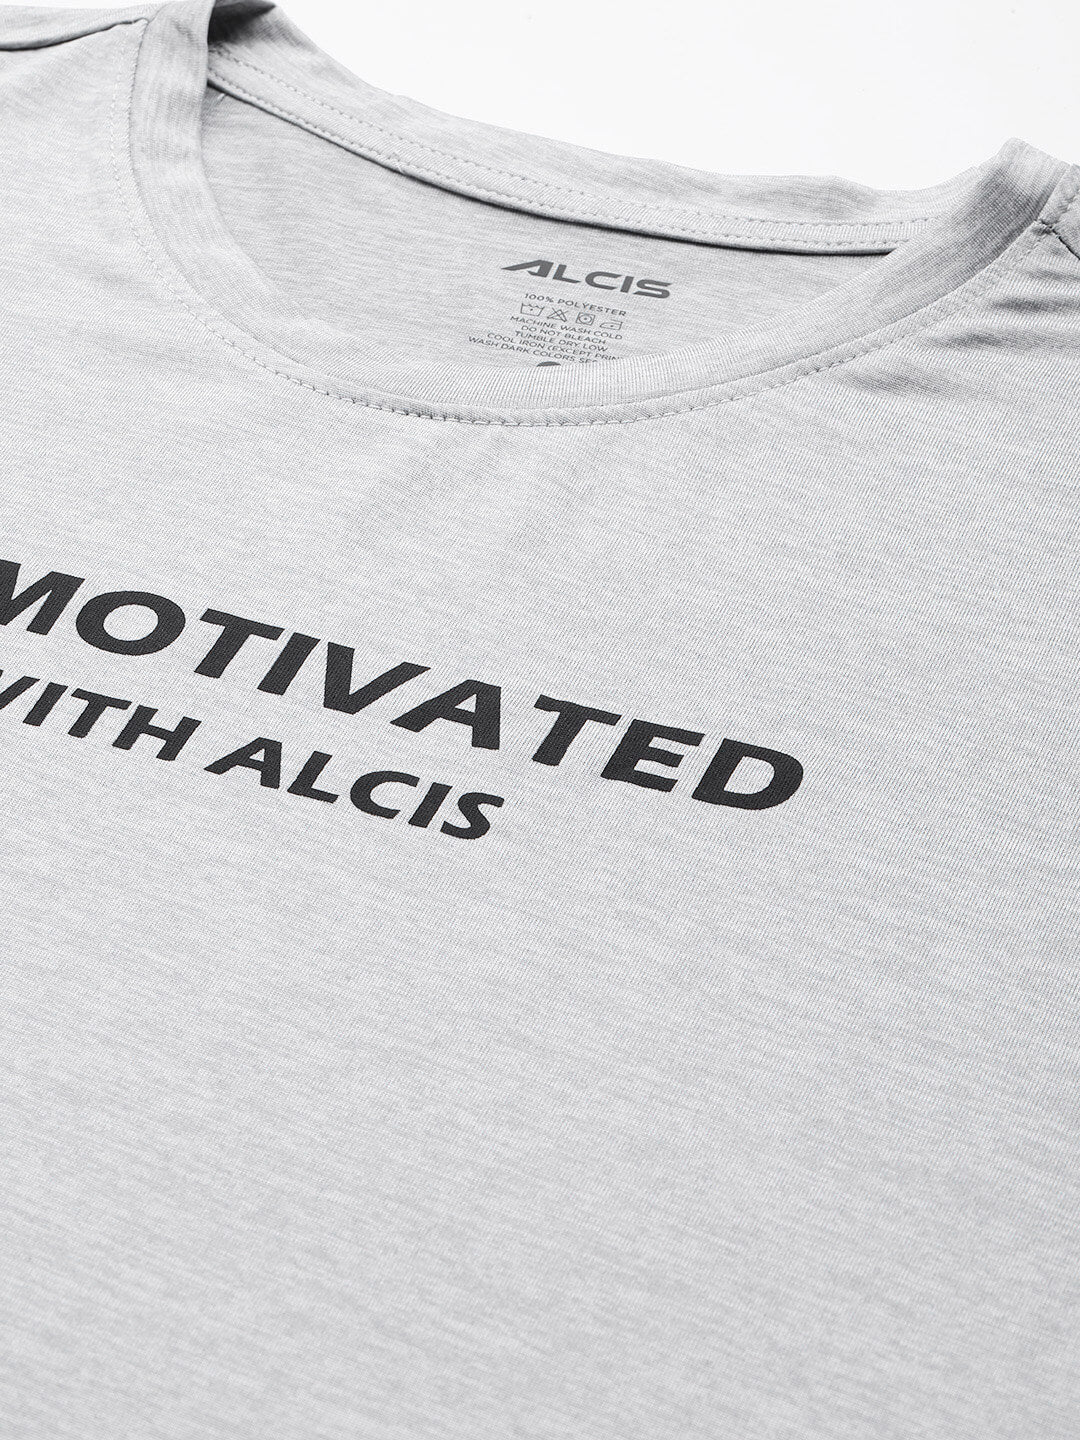 Alcis Men Grey Typography Printed Dry Tech Slim Fit T-shirt